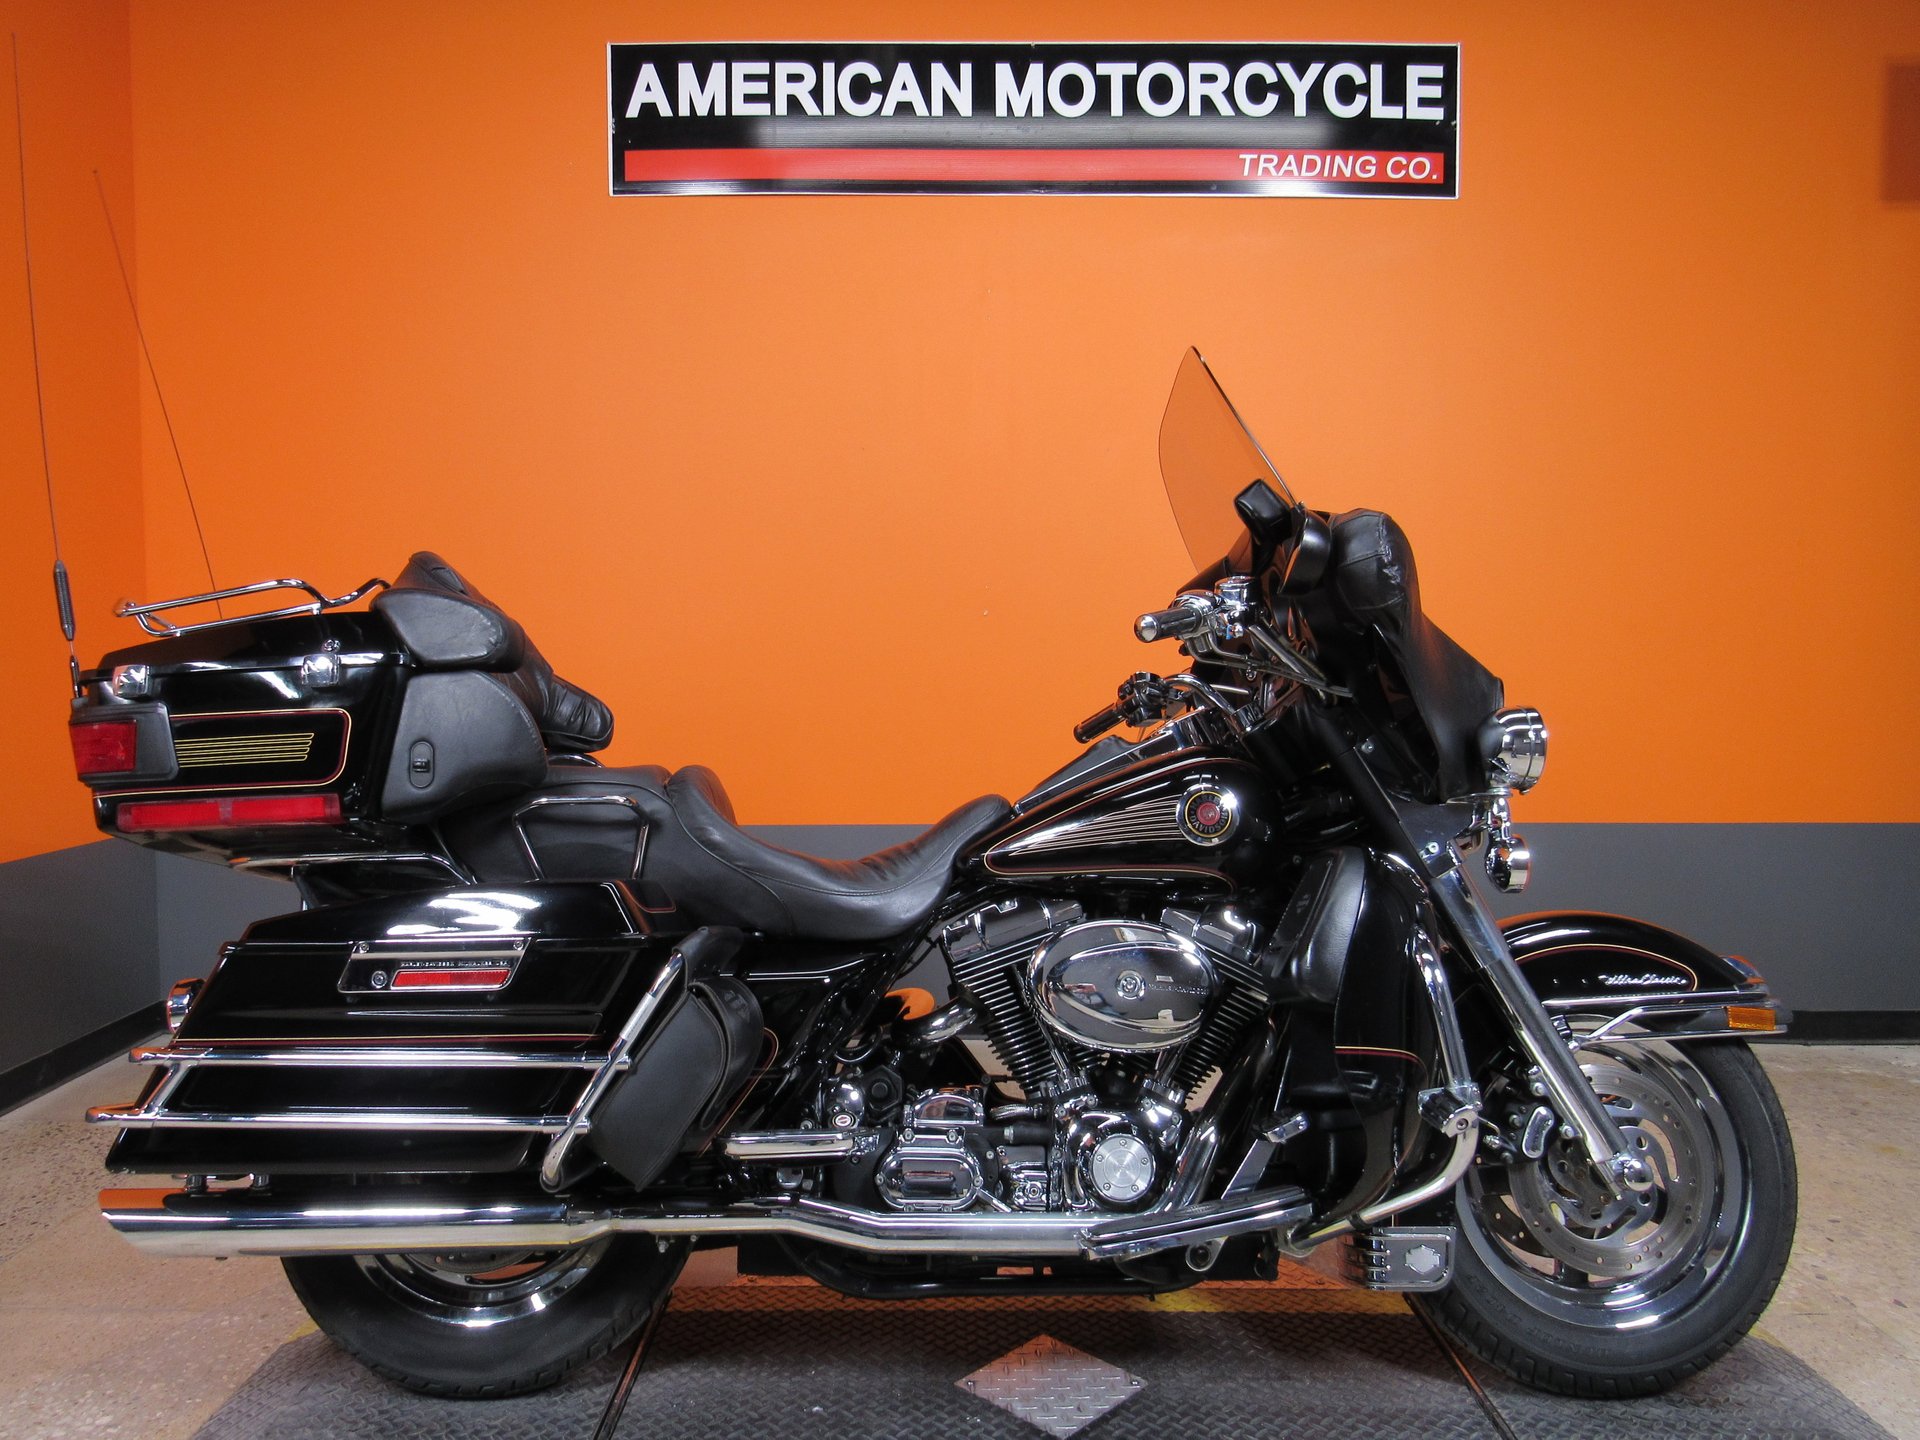 2000 Harley Davidson Ultra Classic American Motorcycle Trading Company Used Harley Davidson Motorcycles